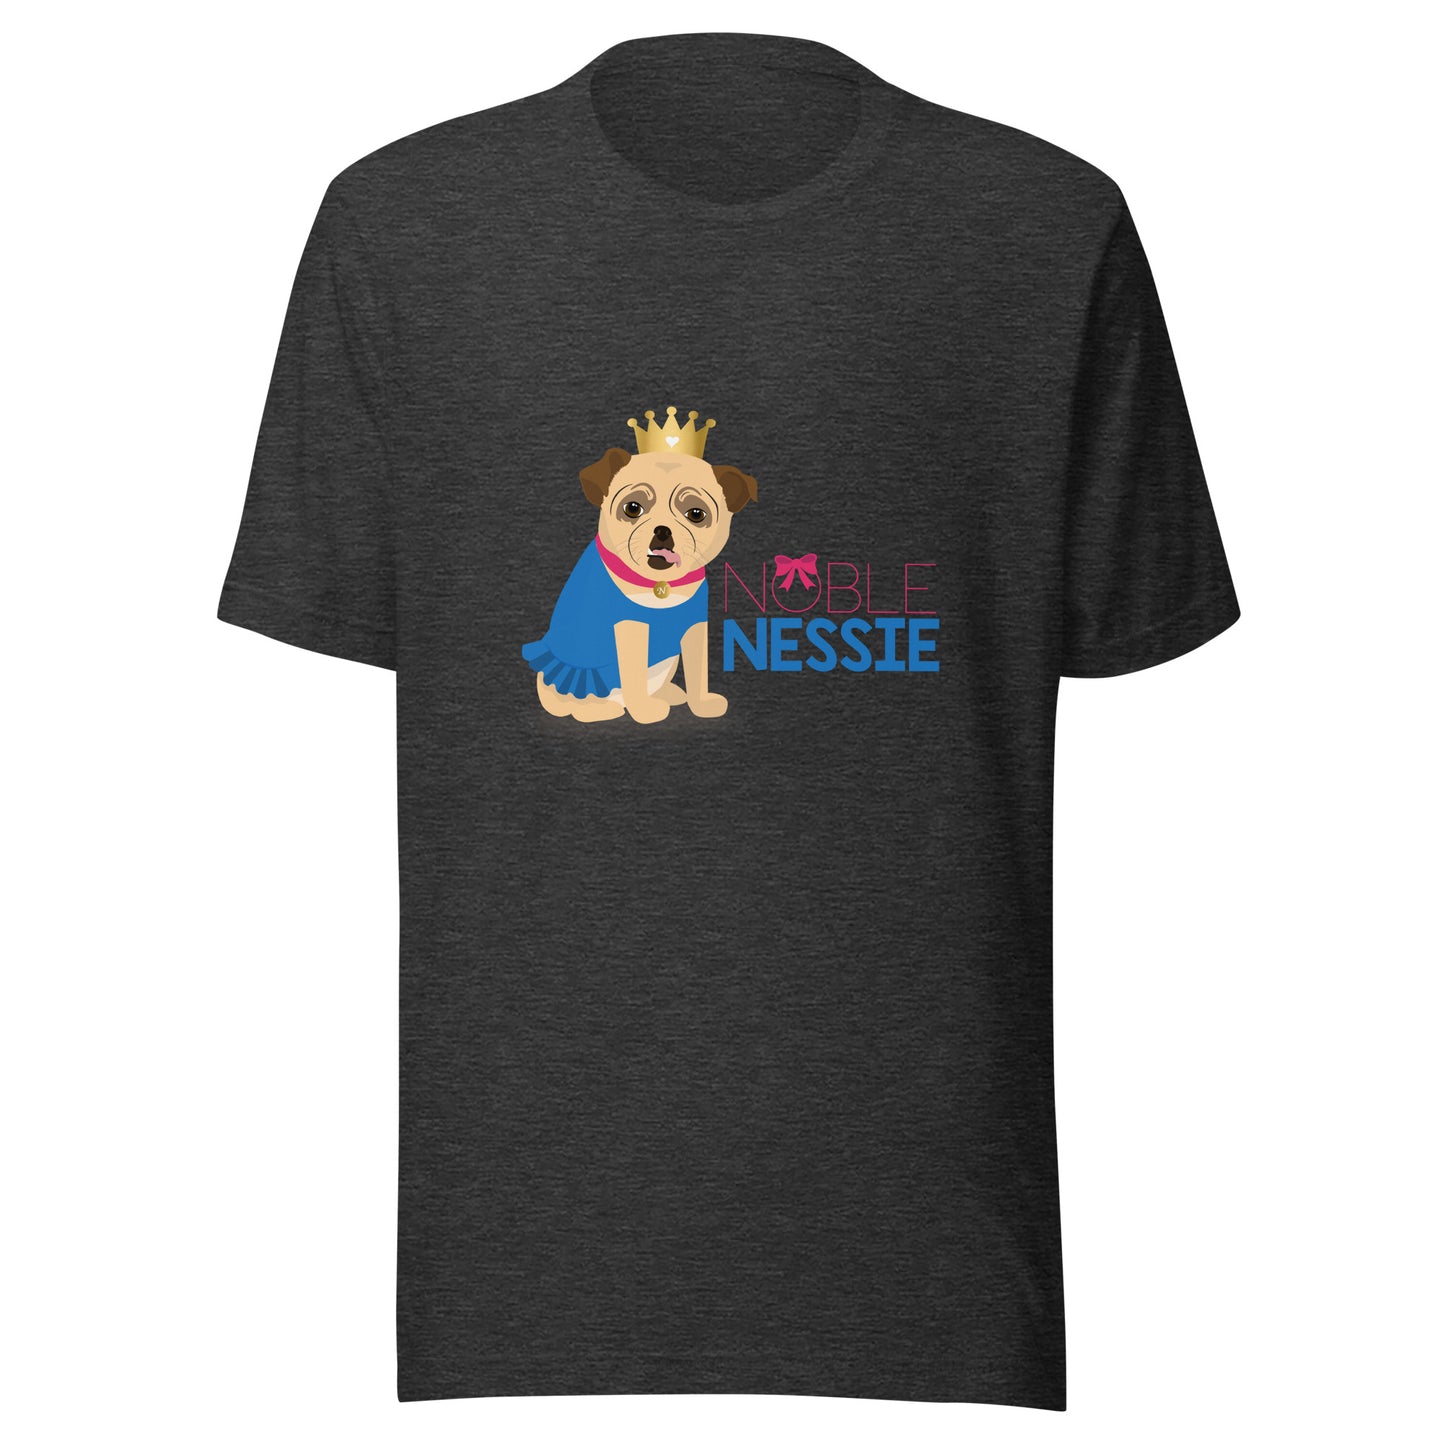 Nessie t-shirt